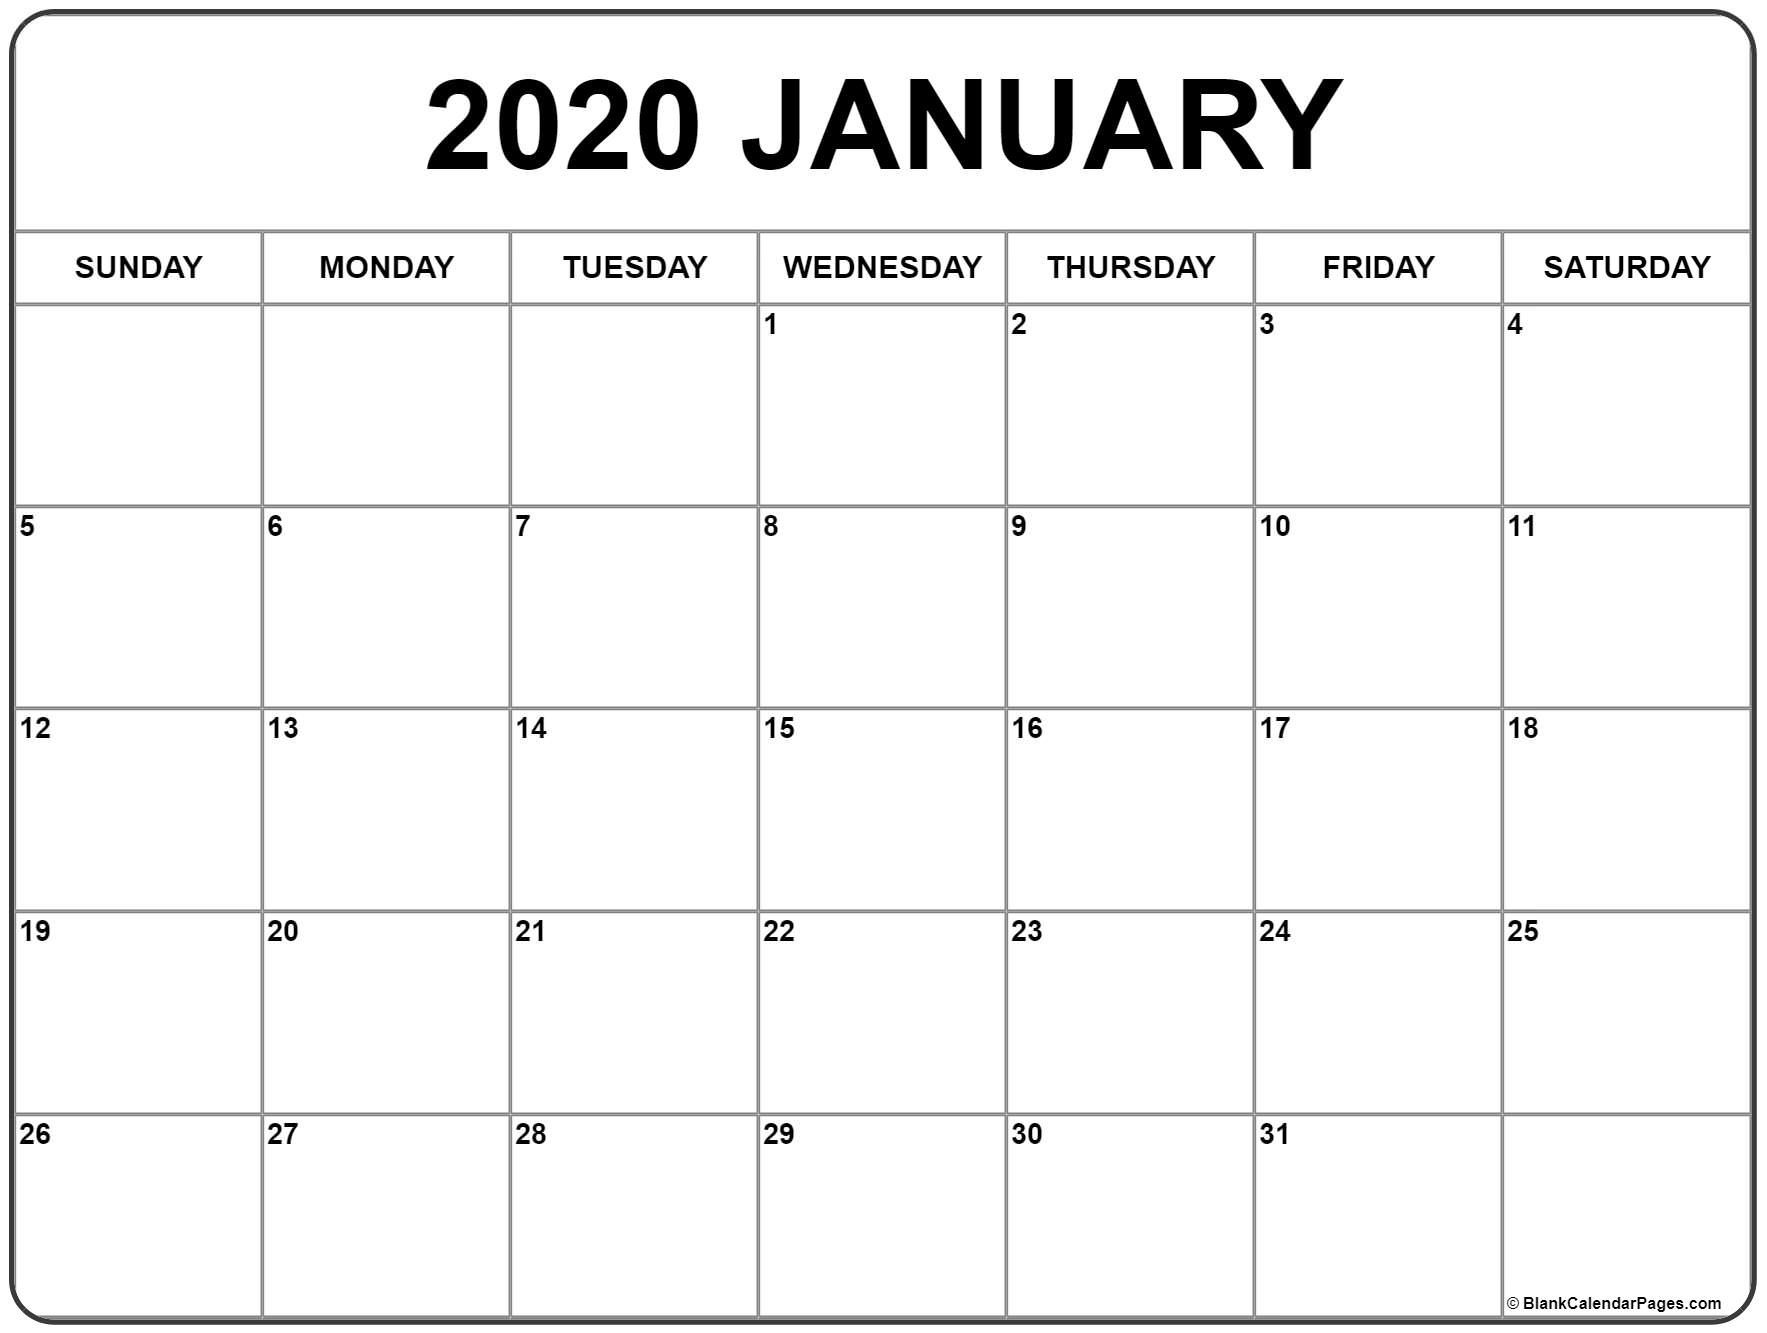 January 2020 Calendar | Free Printable Monthly Calendars Dashing Printable Monthly Calendar With No Weekends